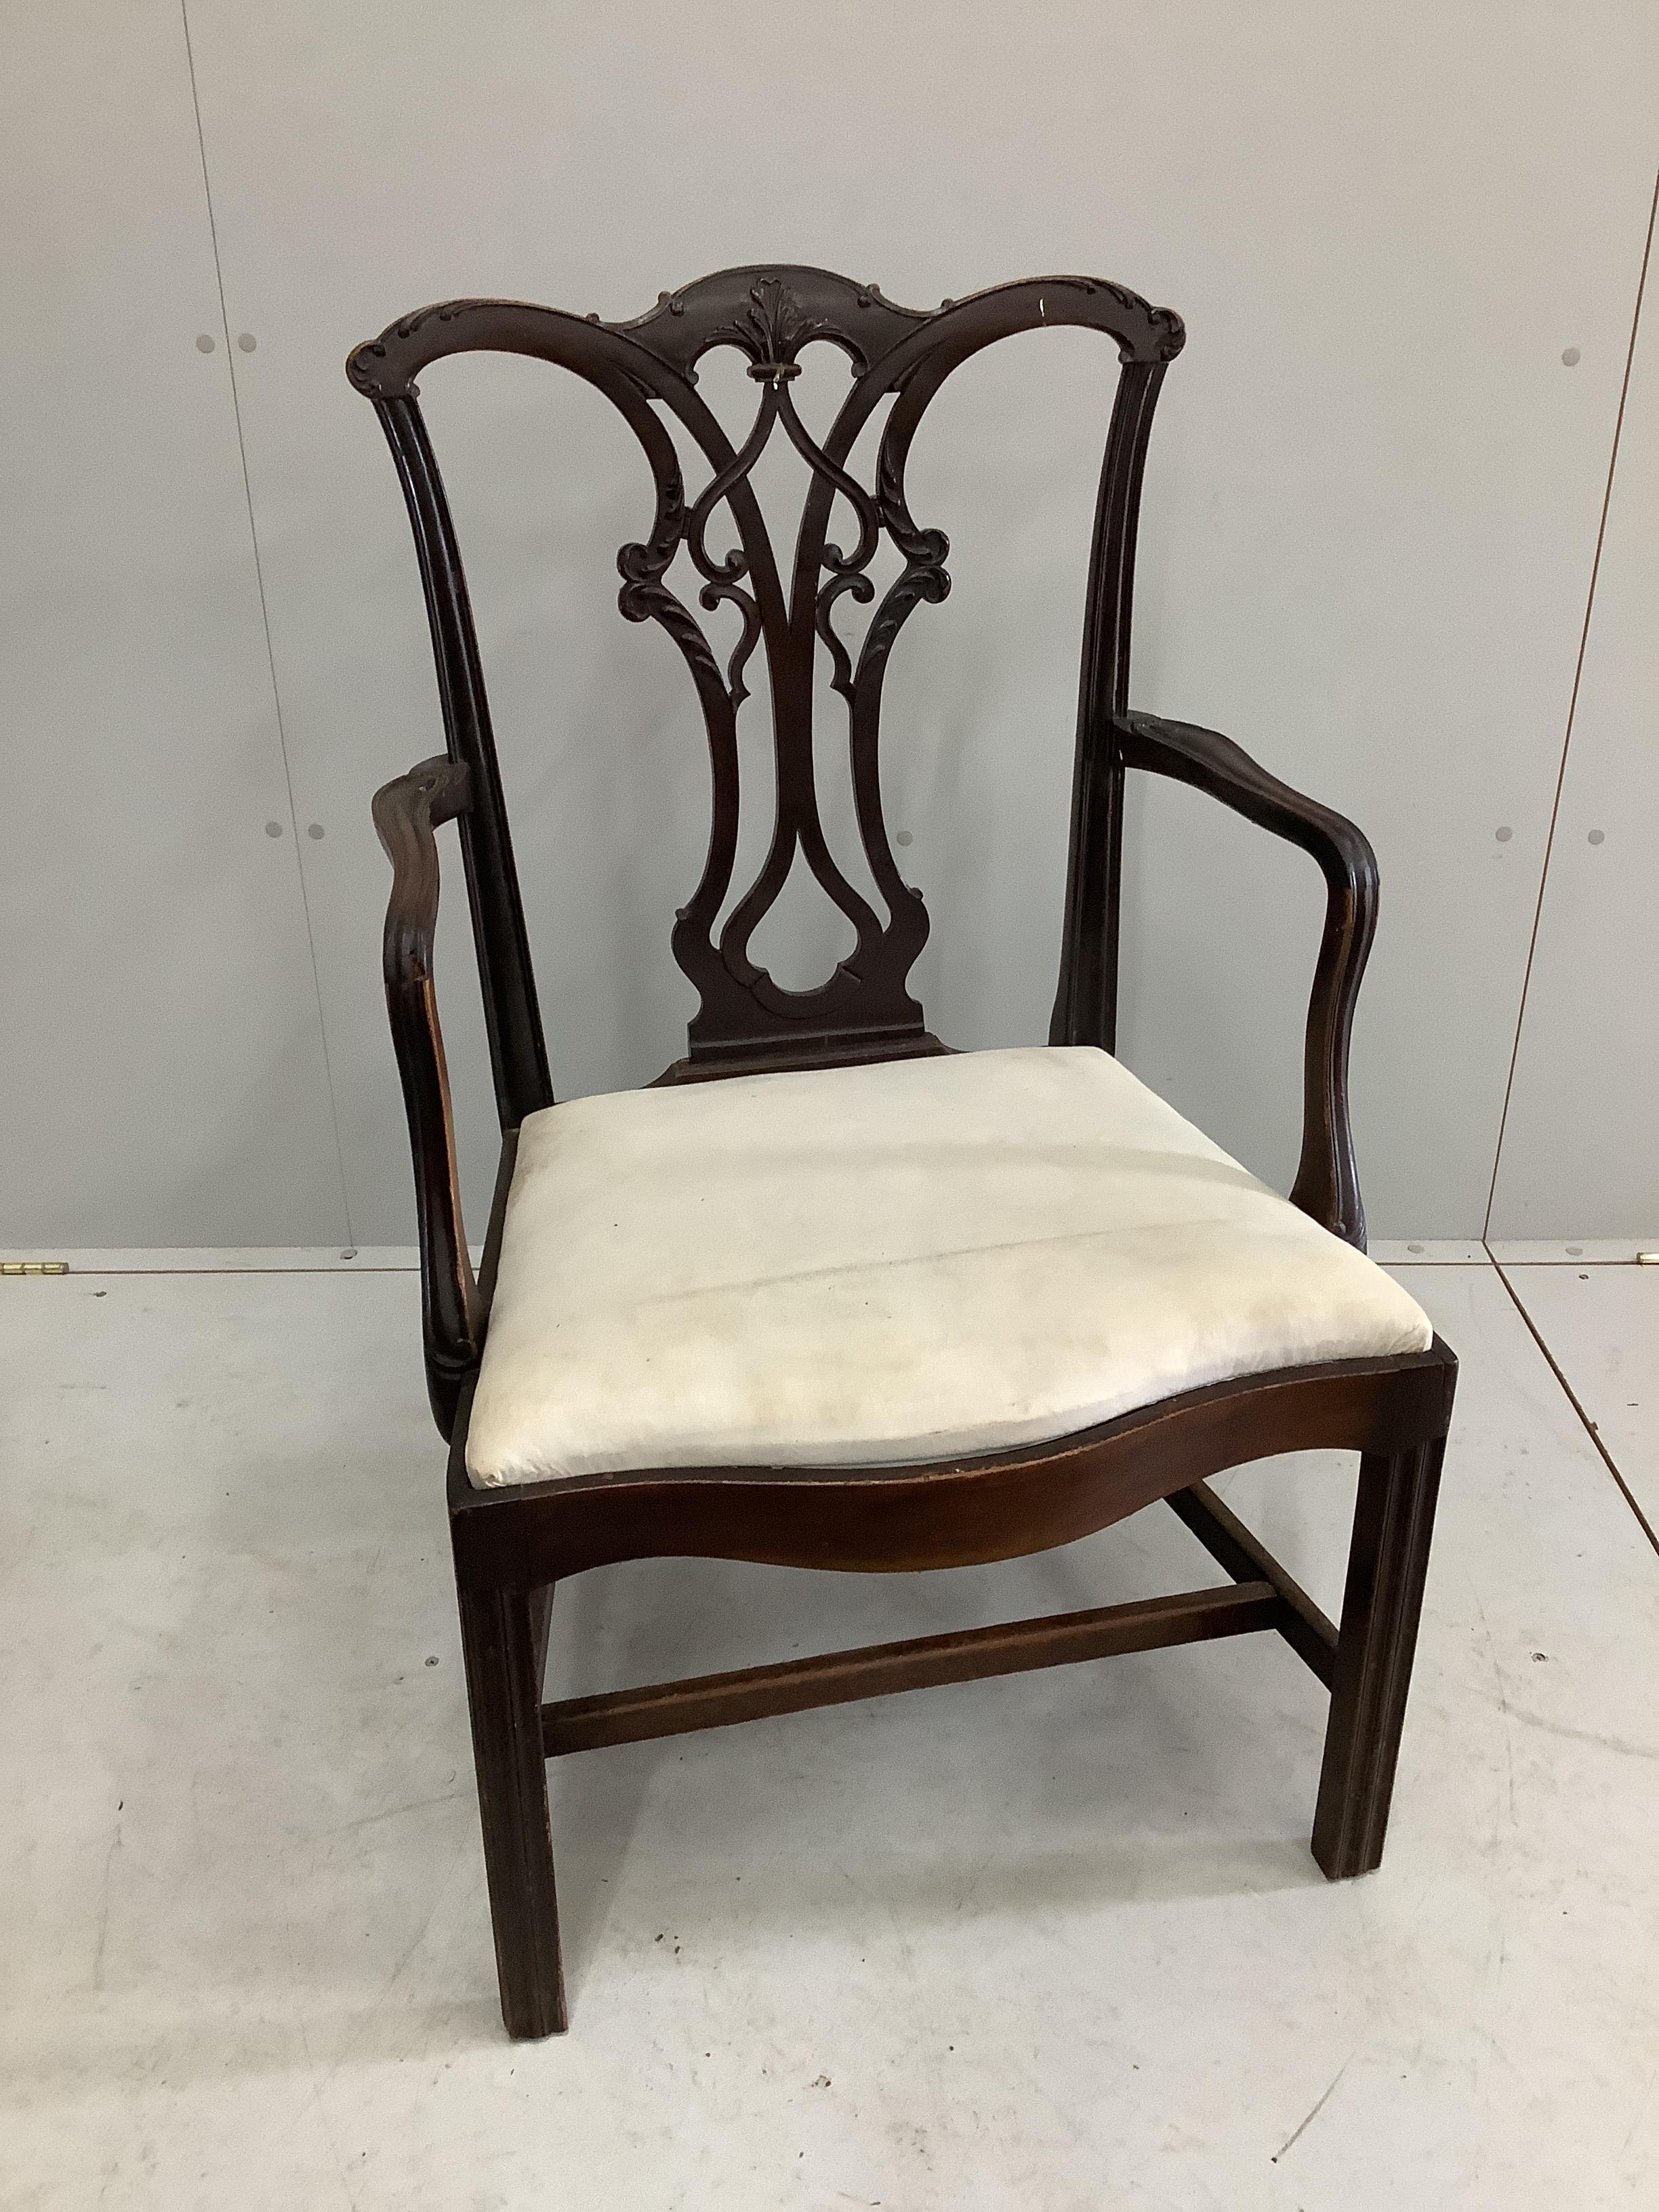 A George III style mahogany elbow chair, width 60cm, depth 50cm, height 100cm